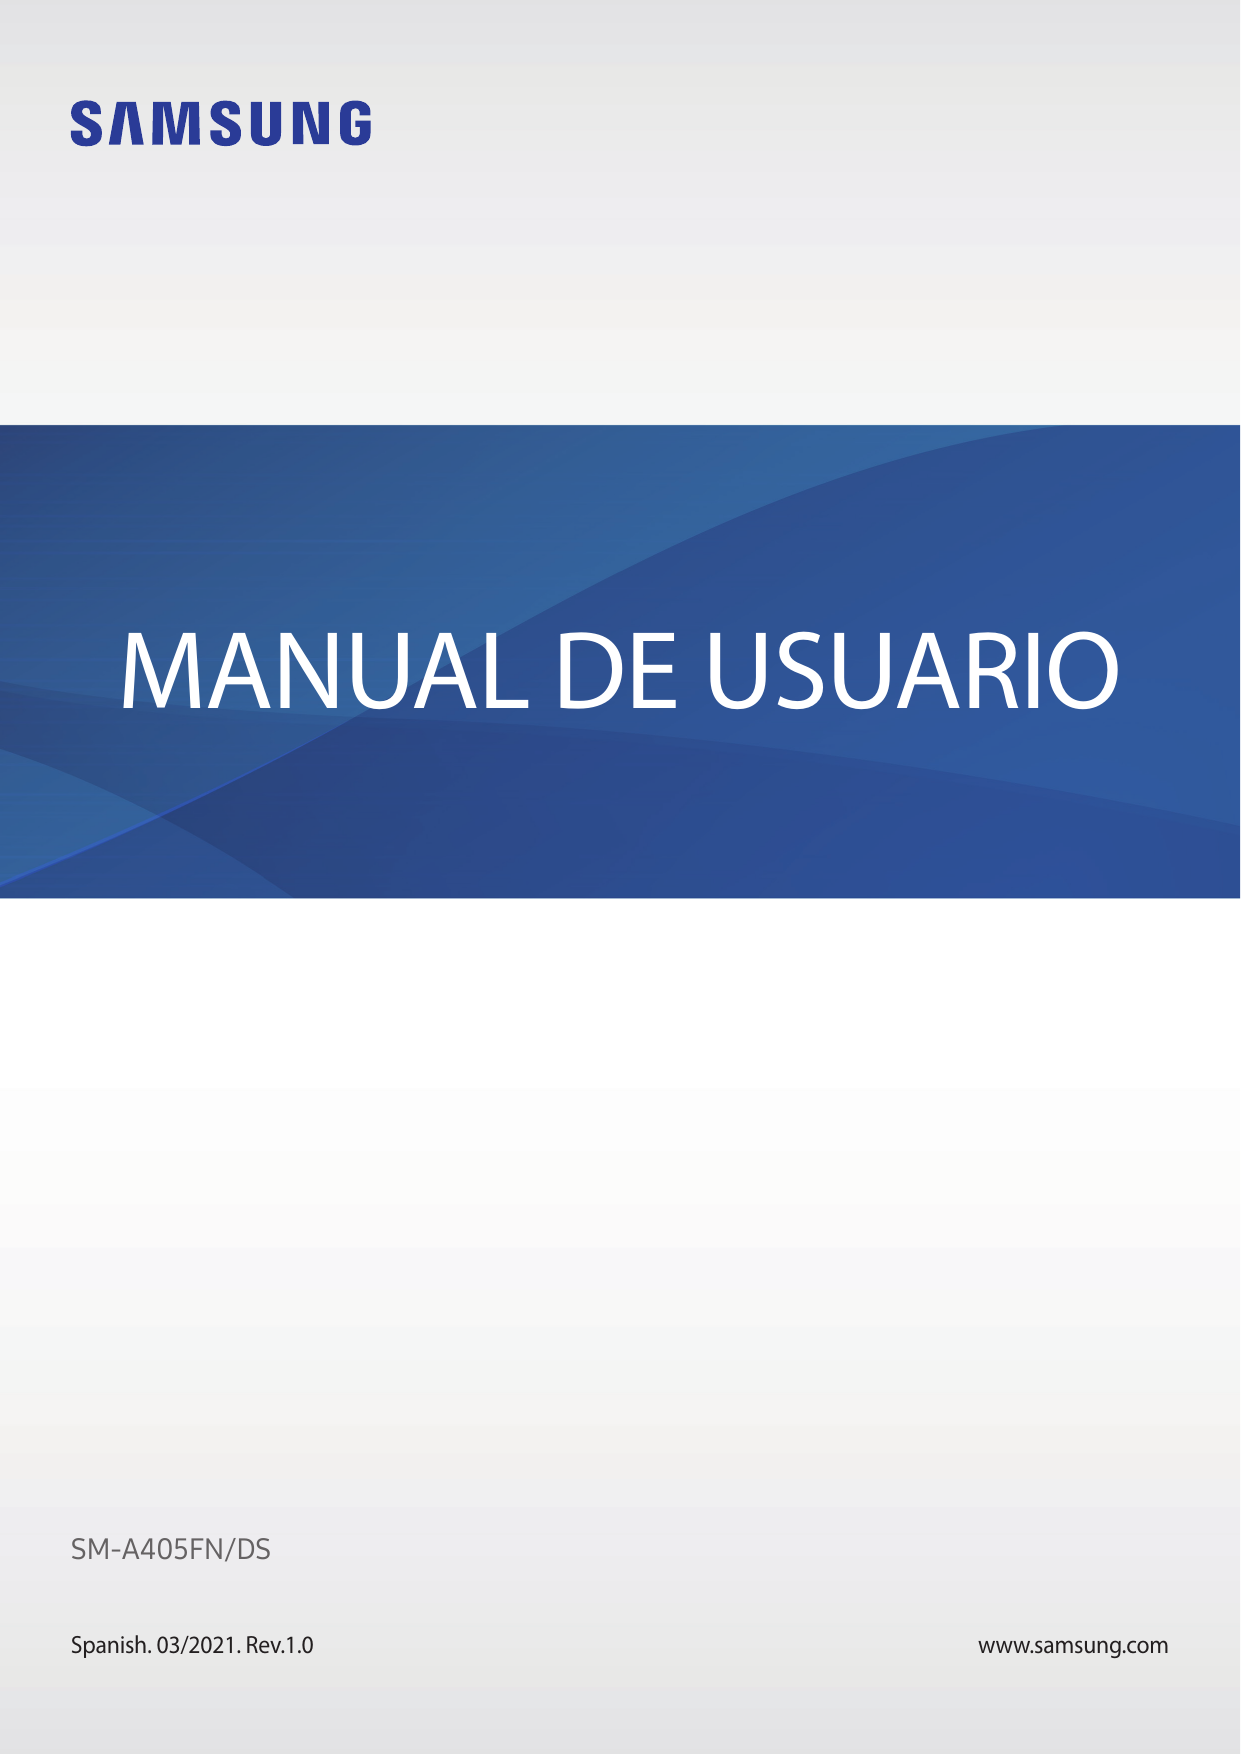 MANUAL DE USUARIOSM-A405FN/DSSpanish. 03/2021. Rev.1.0www.samsung.com